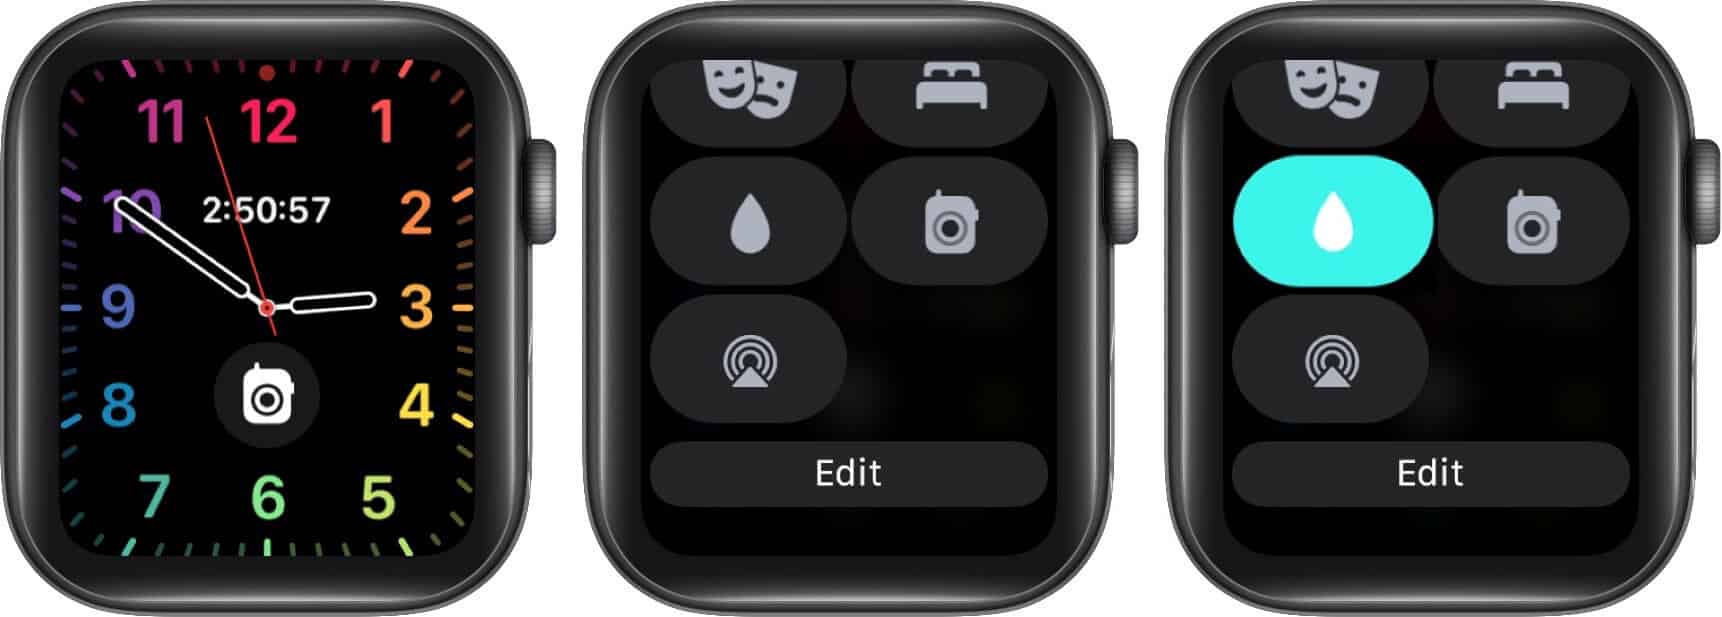 turn on water lock on apple watch